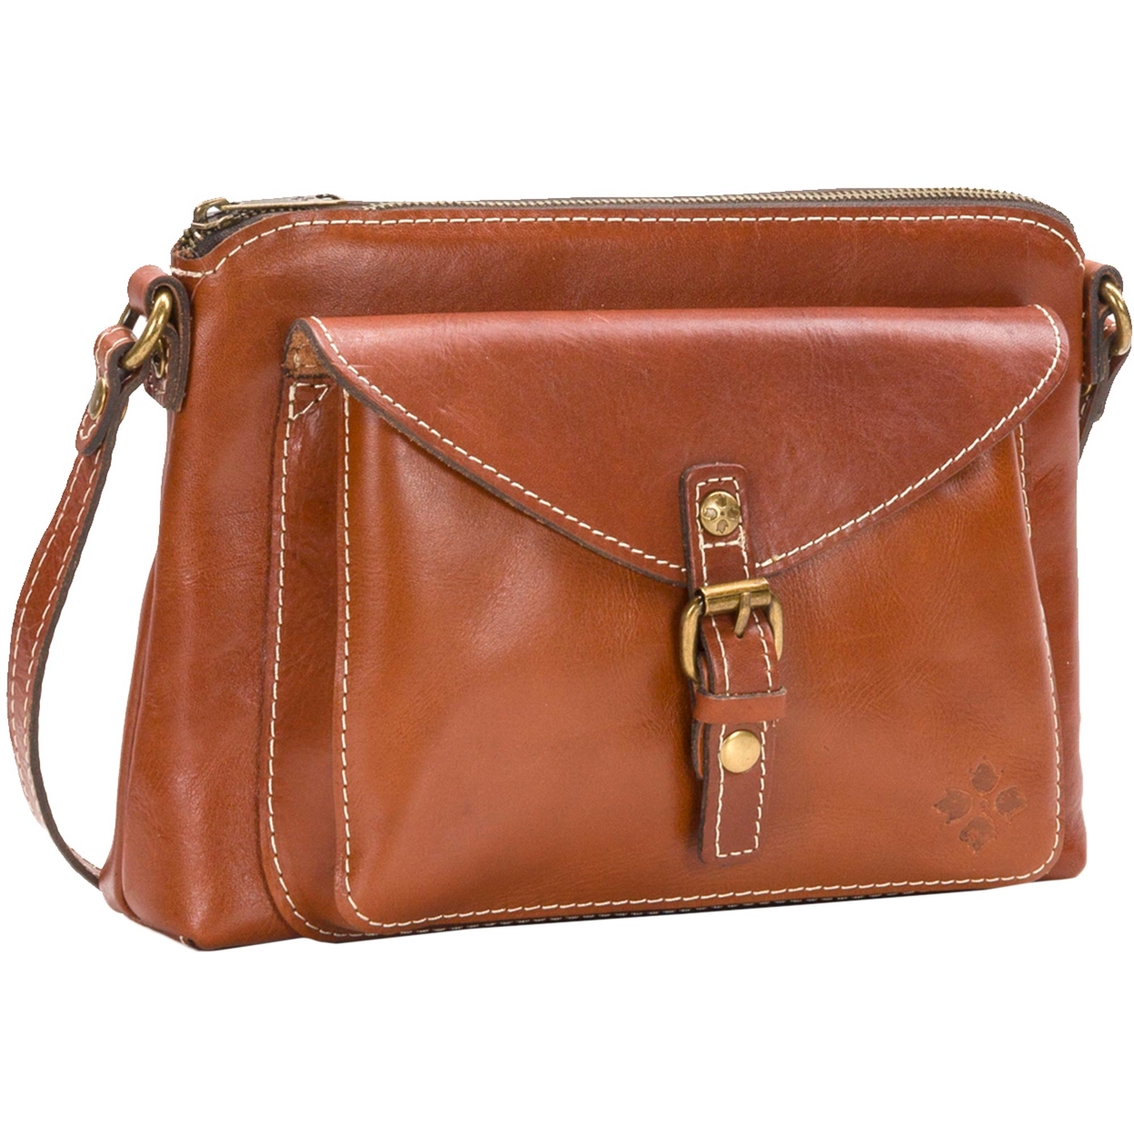 Patricia Nash Heritage Leather Avellino Shoulder Handbag - Image 3 of 4